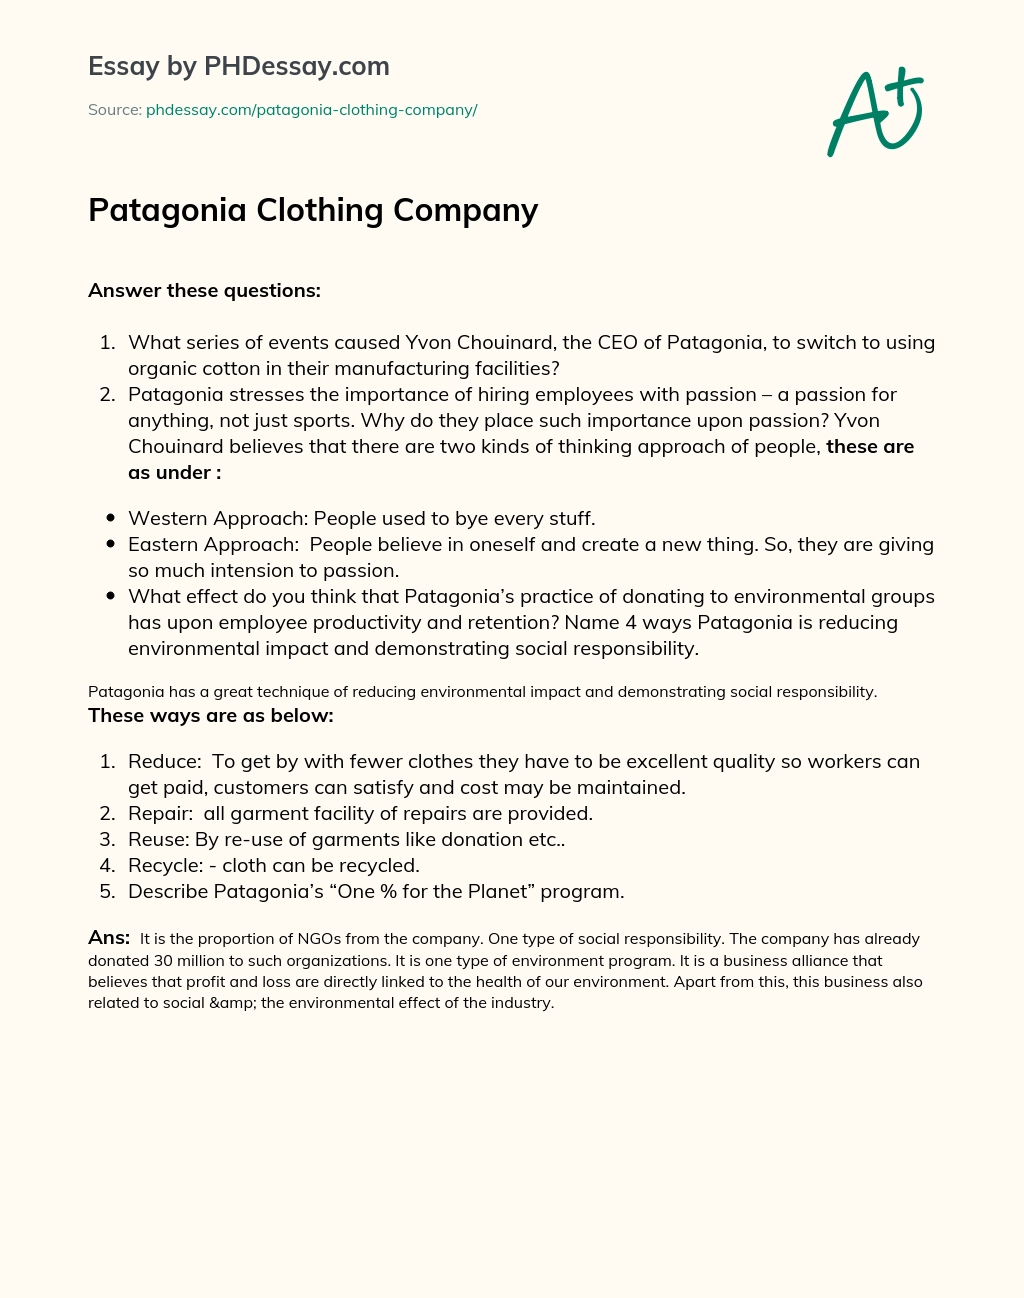 Patagonia Clothing Company essay